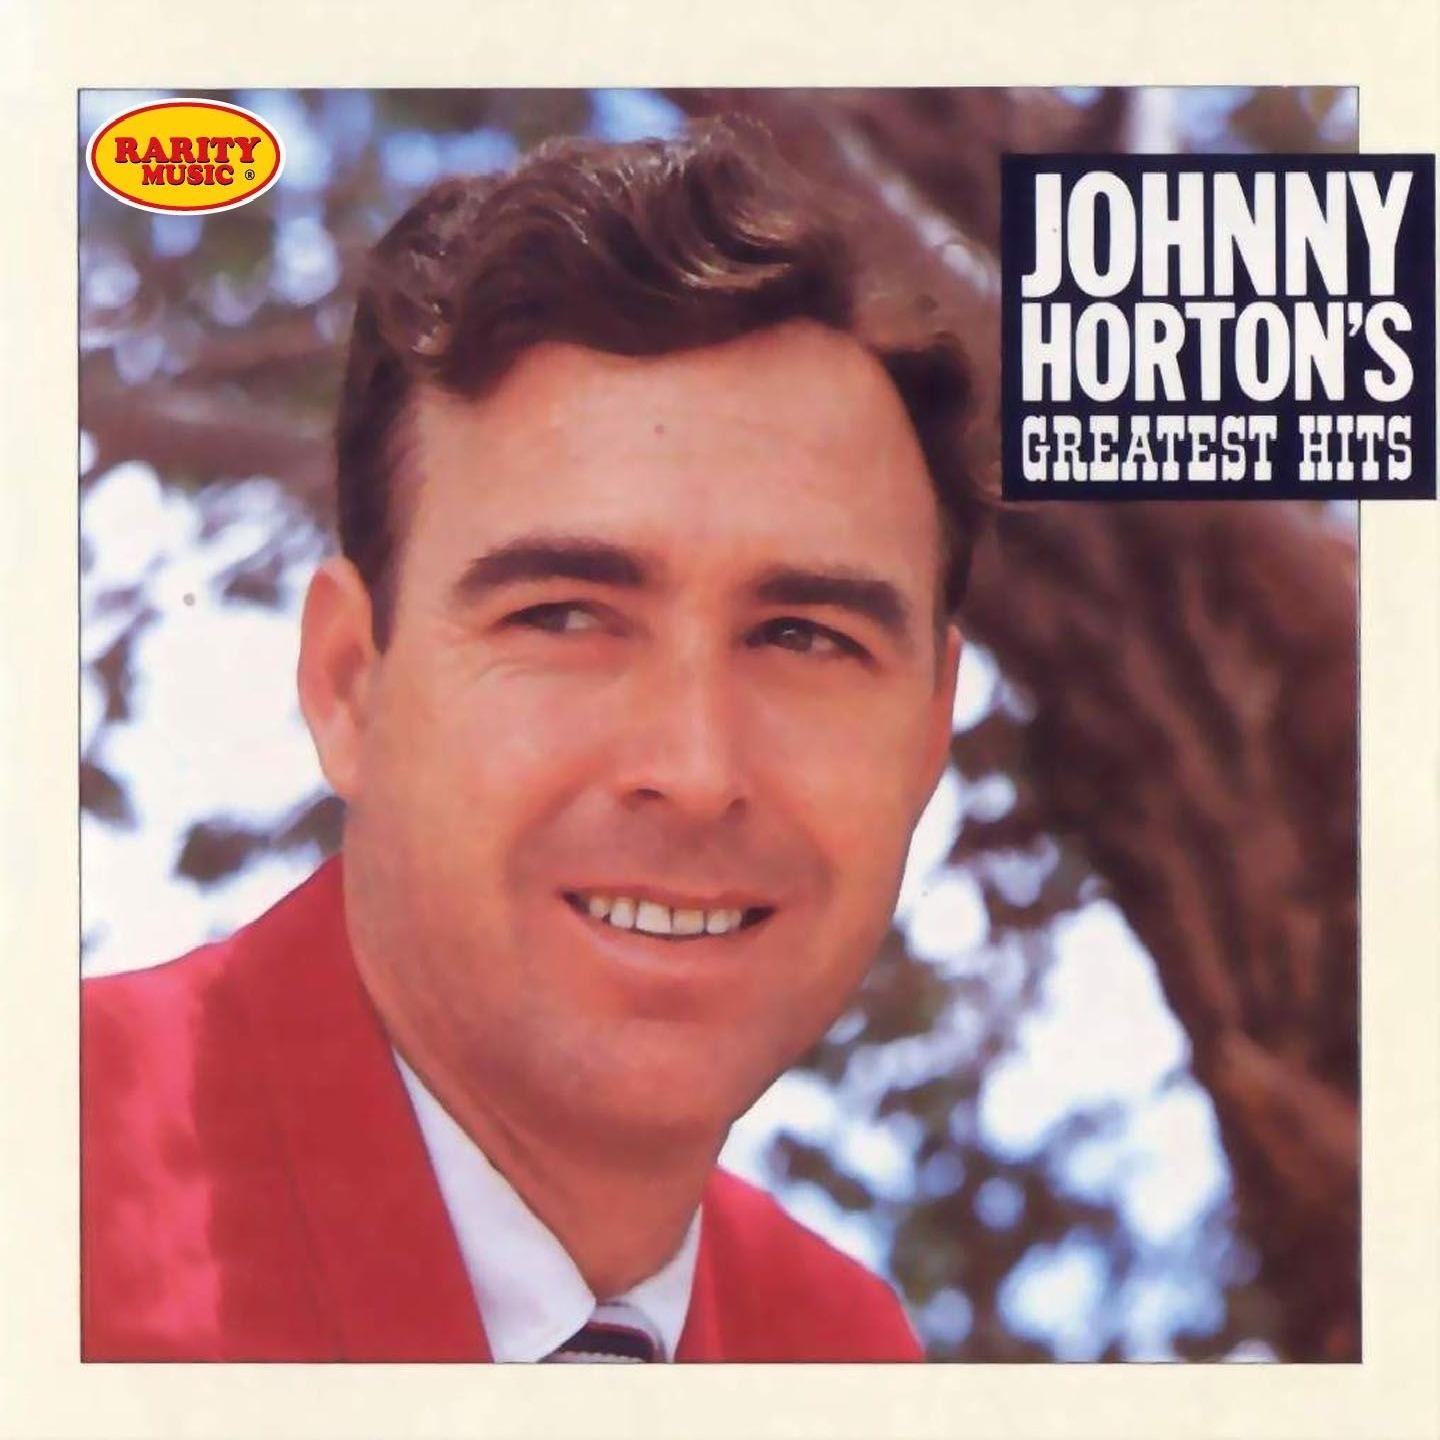 Johnny Horton's Greatest Hits: Rarity Music Pop, Vol. 302